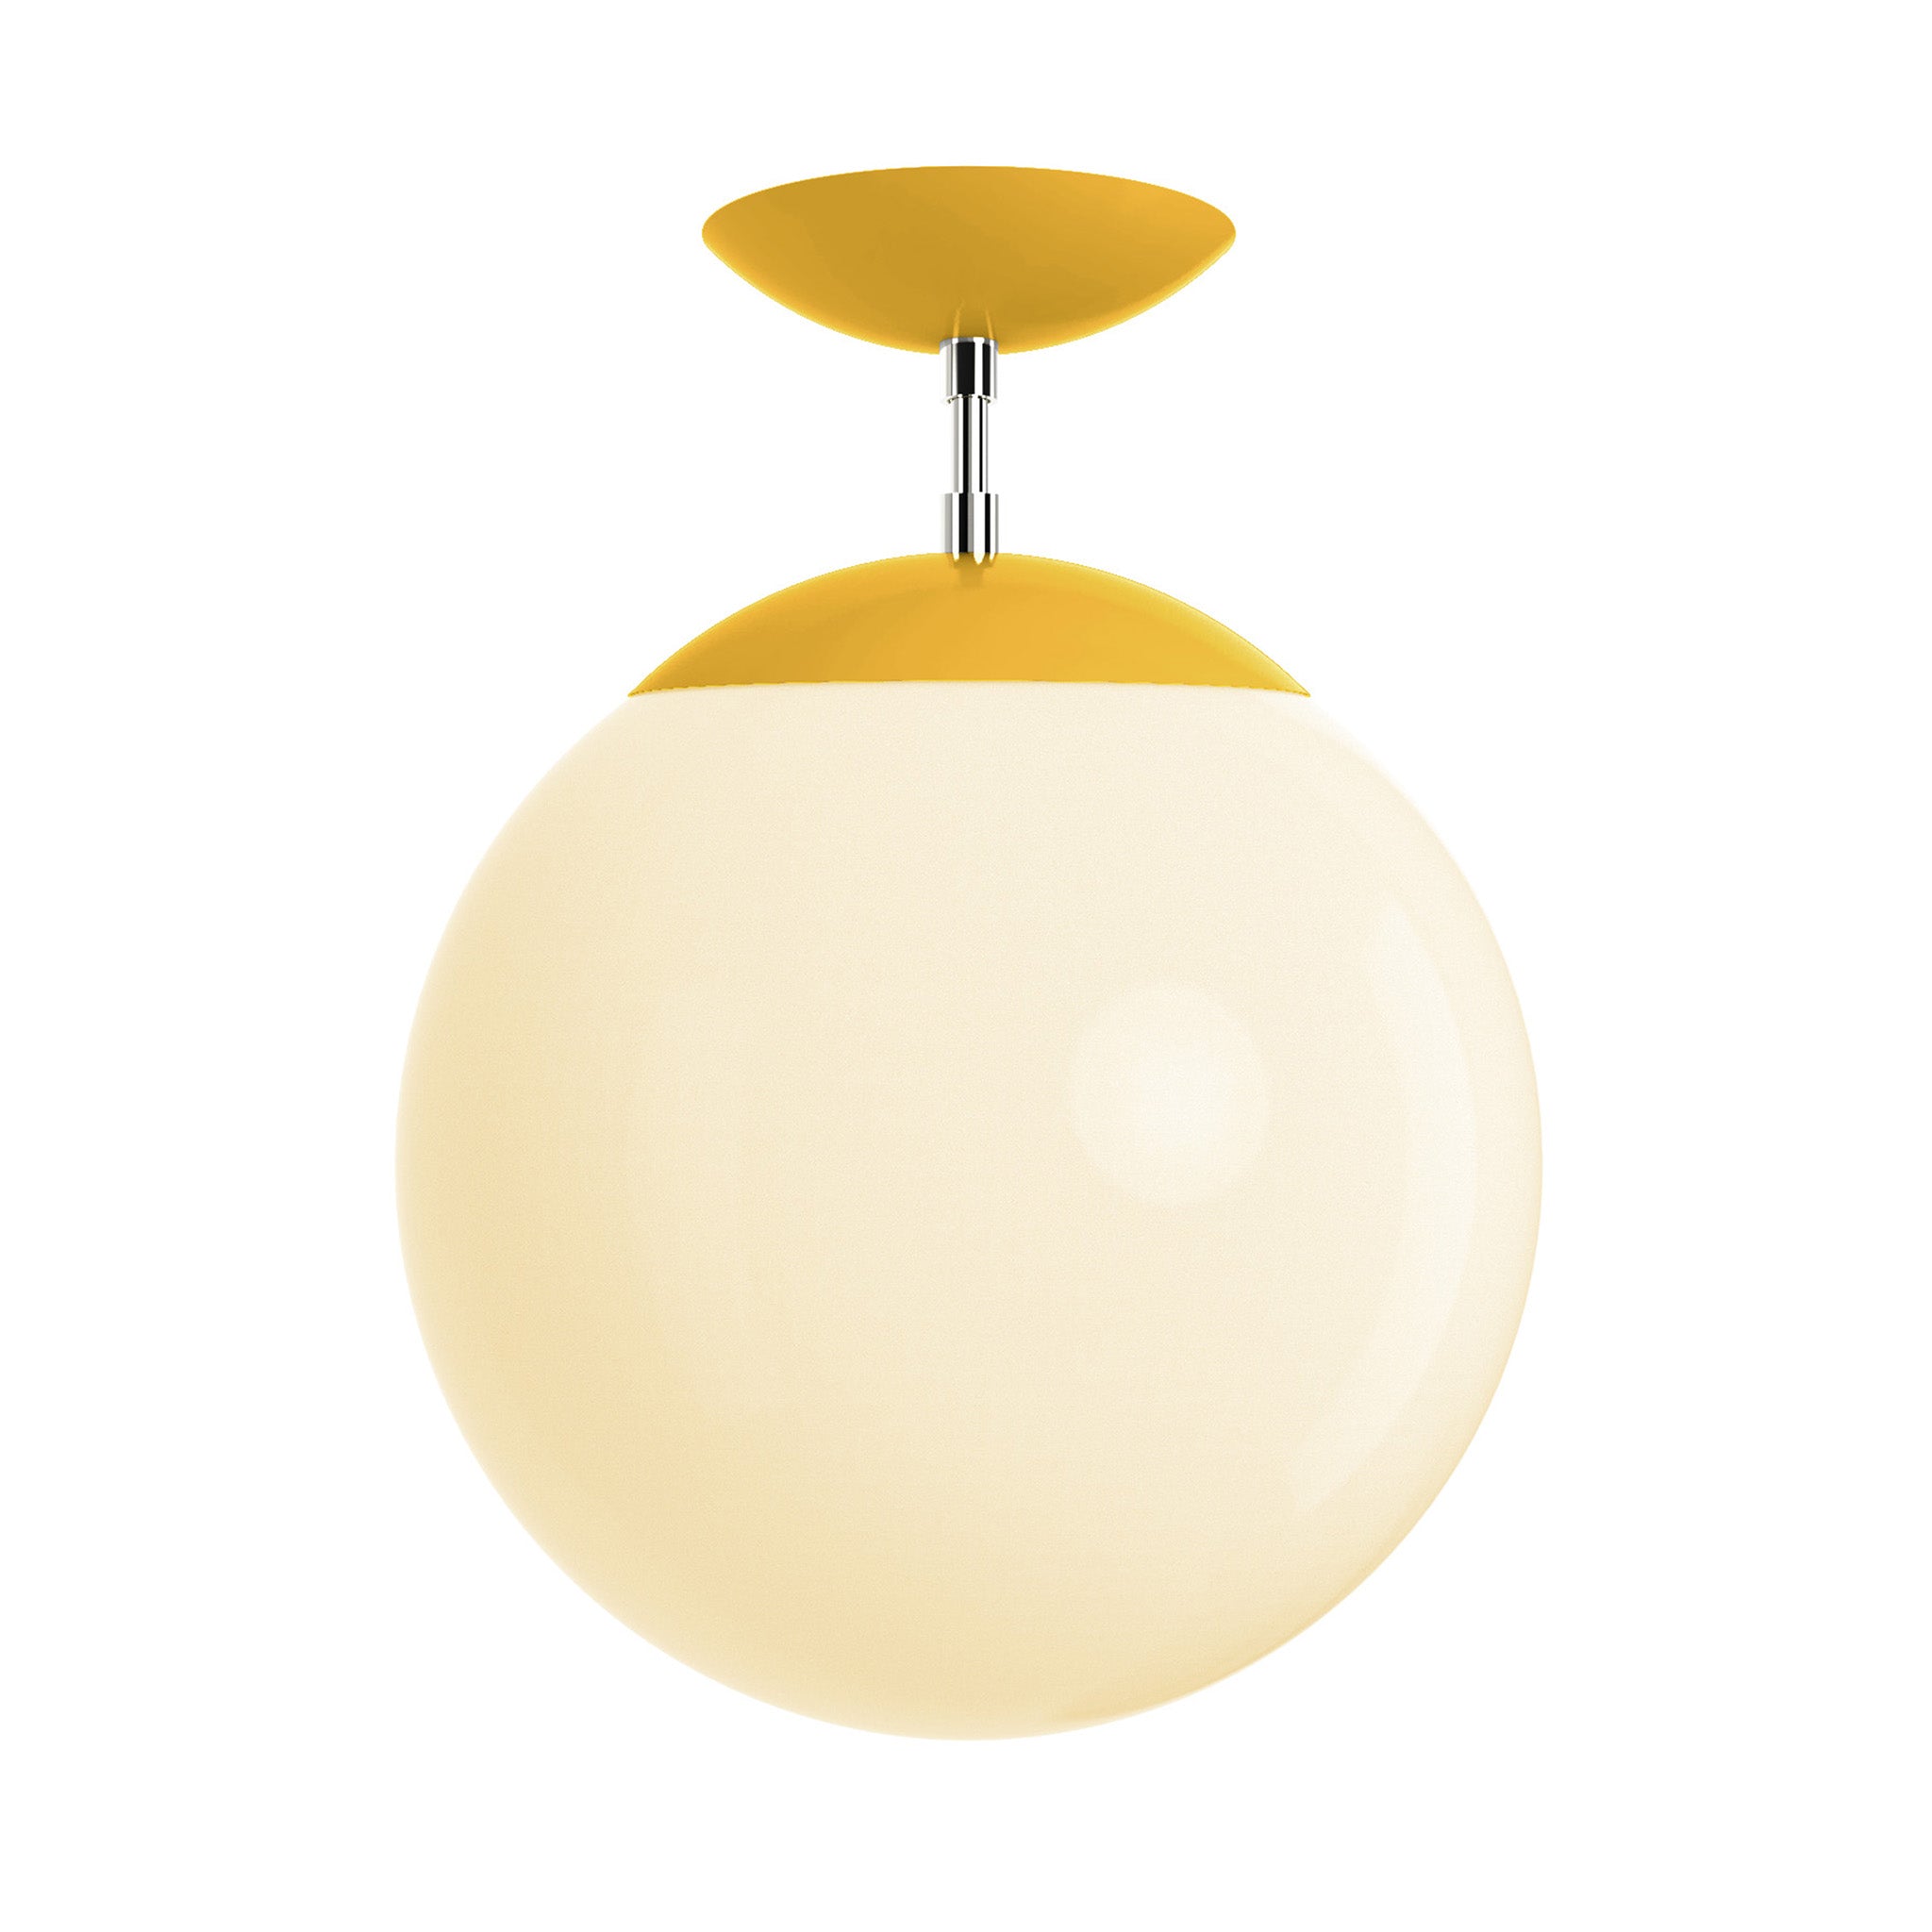 Polished nickel and ochre cap white globe flush mount 12" dutton brown lighting